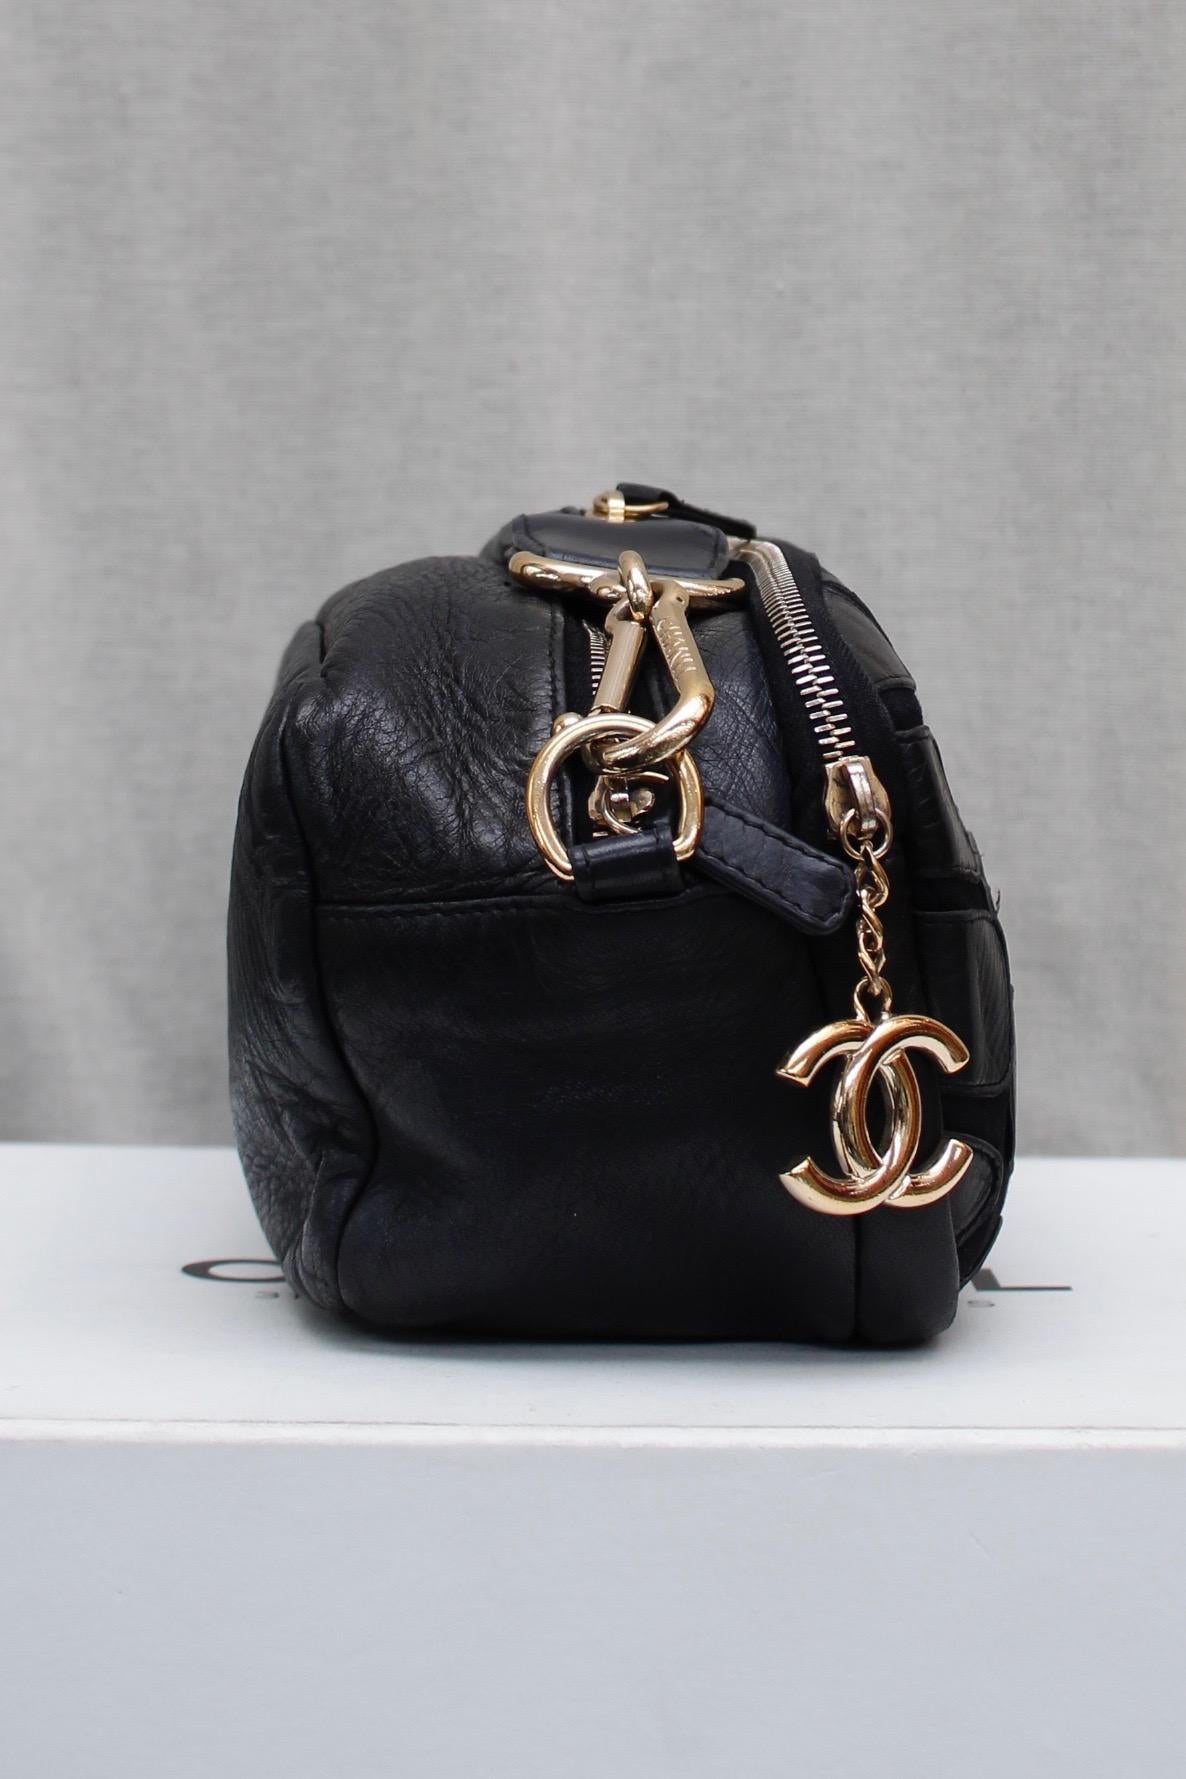 Women's Chanel black leather cross-body bag, 2000’s